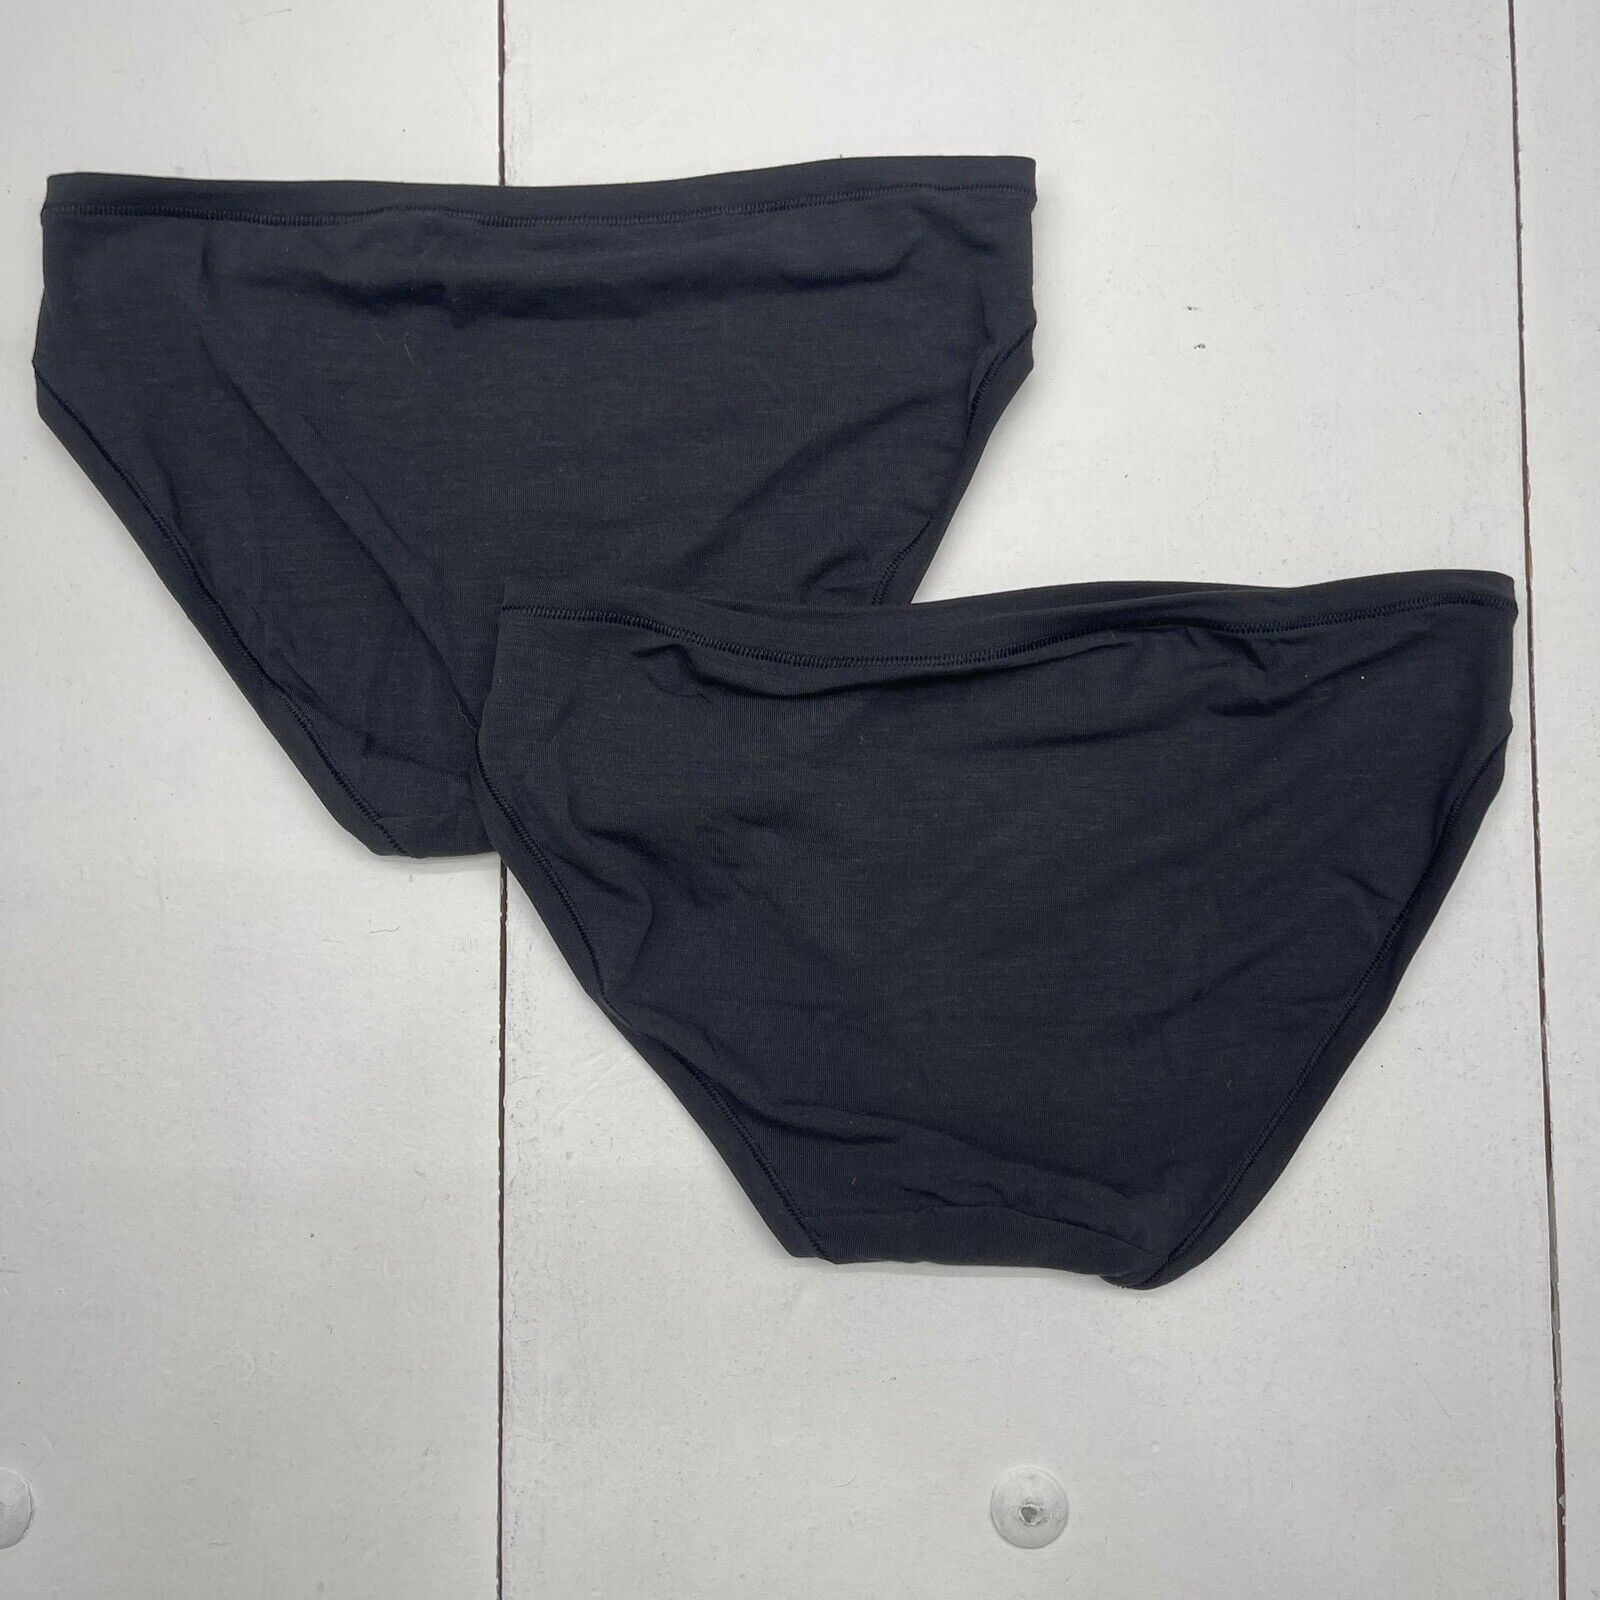 Auden Black Seamless Bikini Underwear Women’s Size Medium NEW